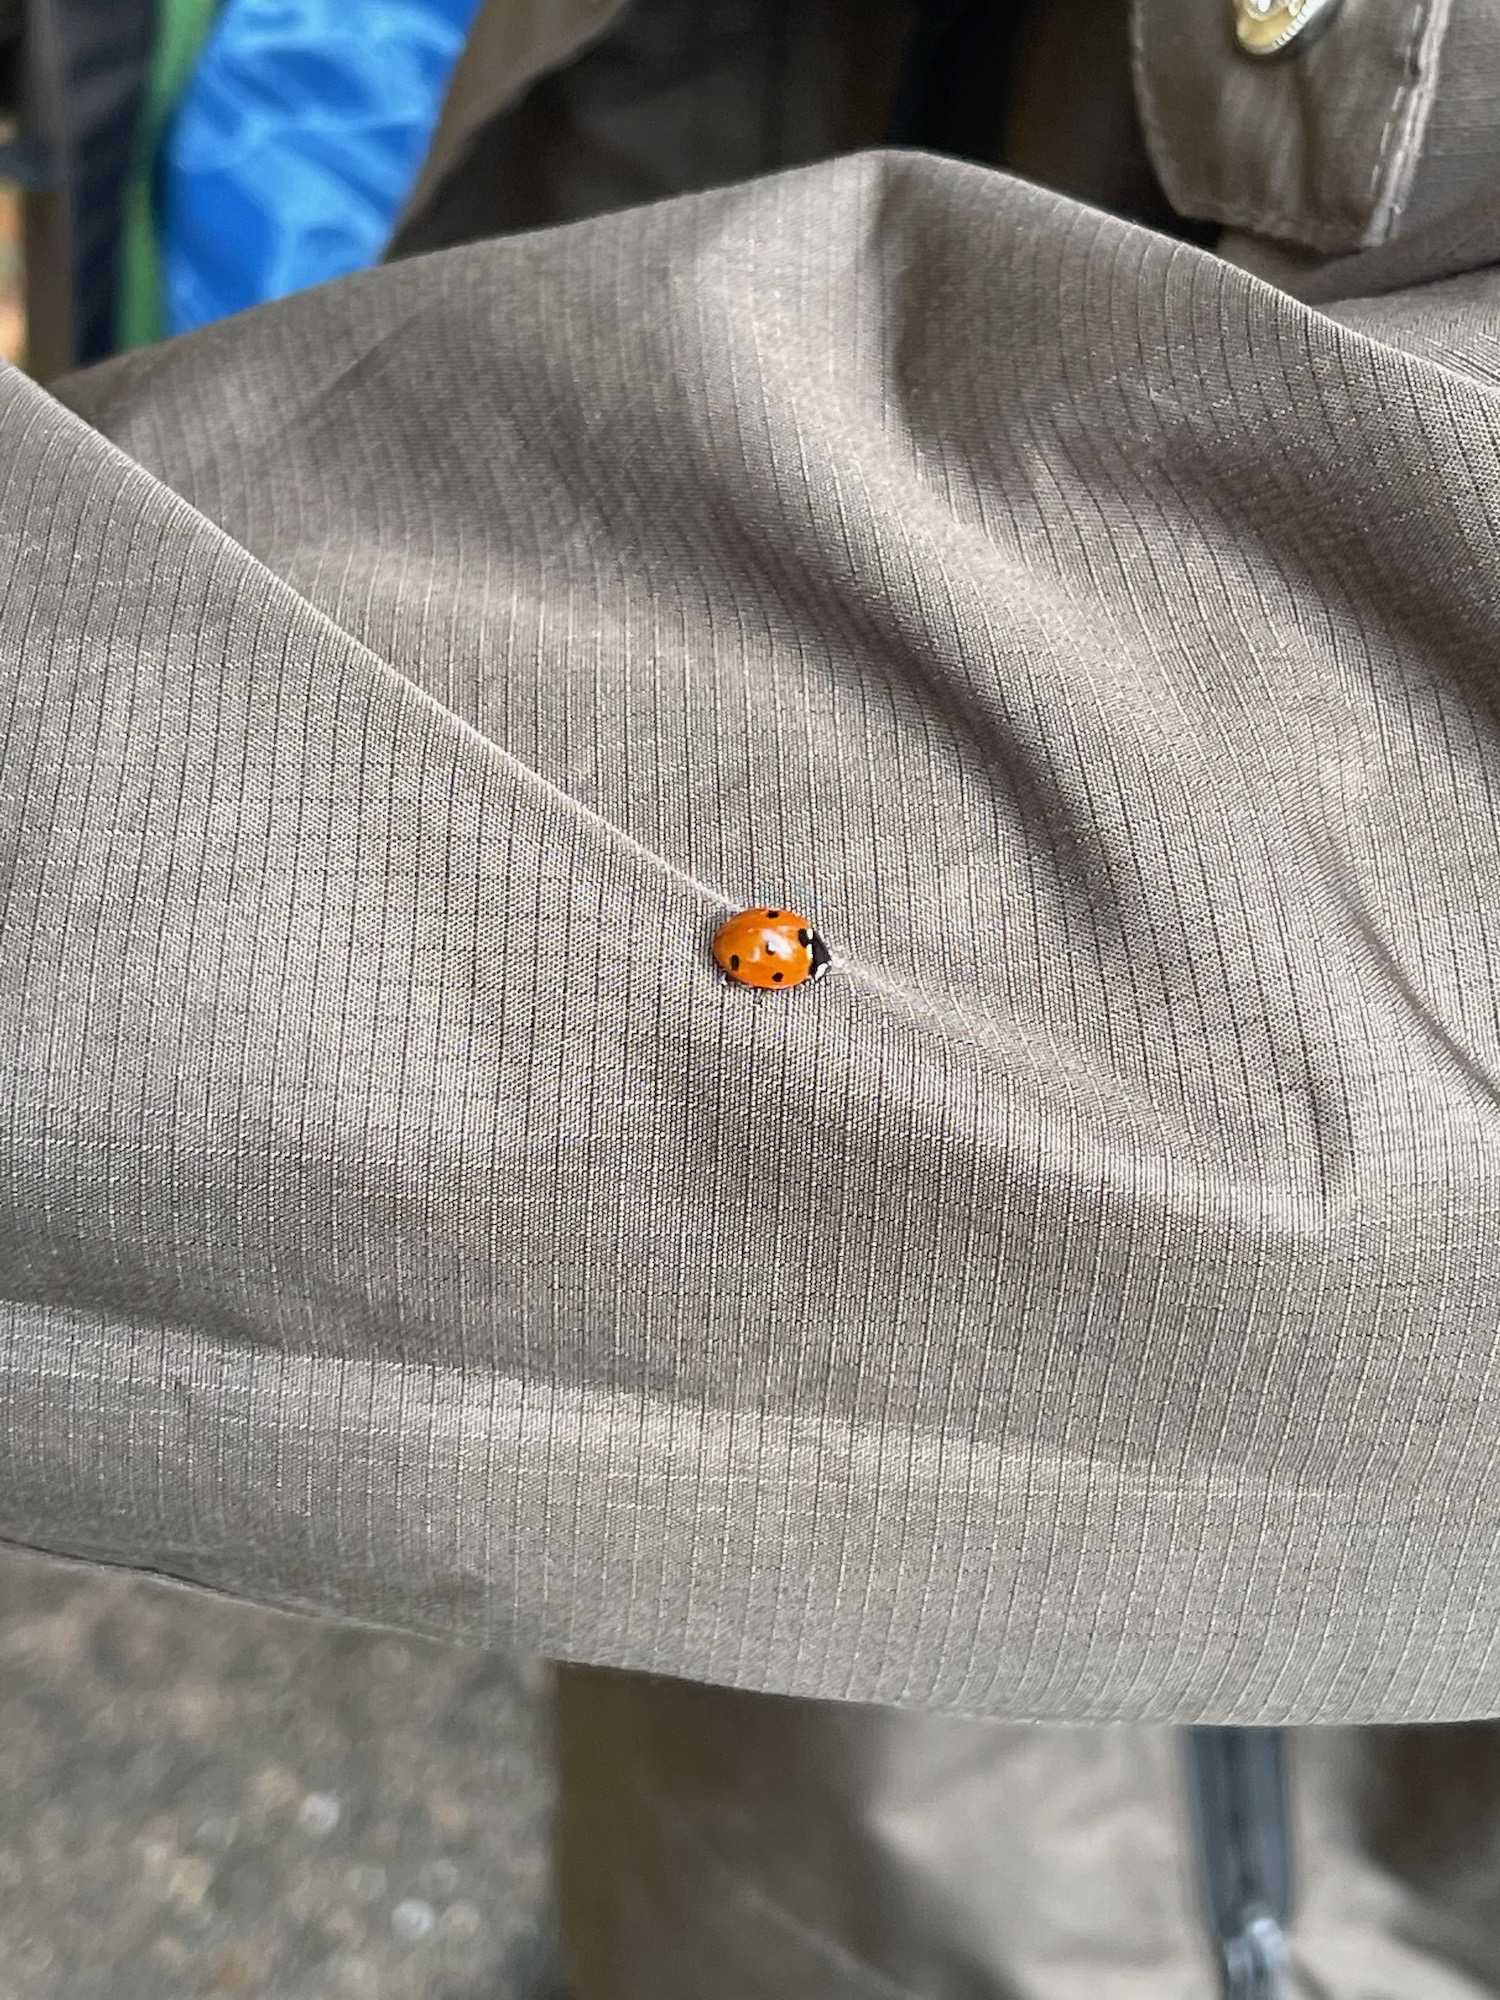 a ladybug on a piece of fabric